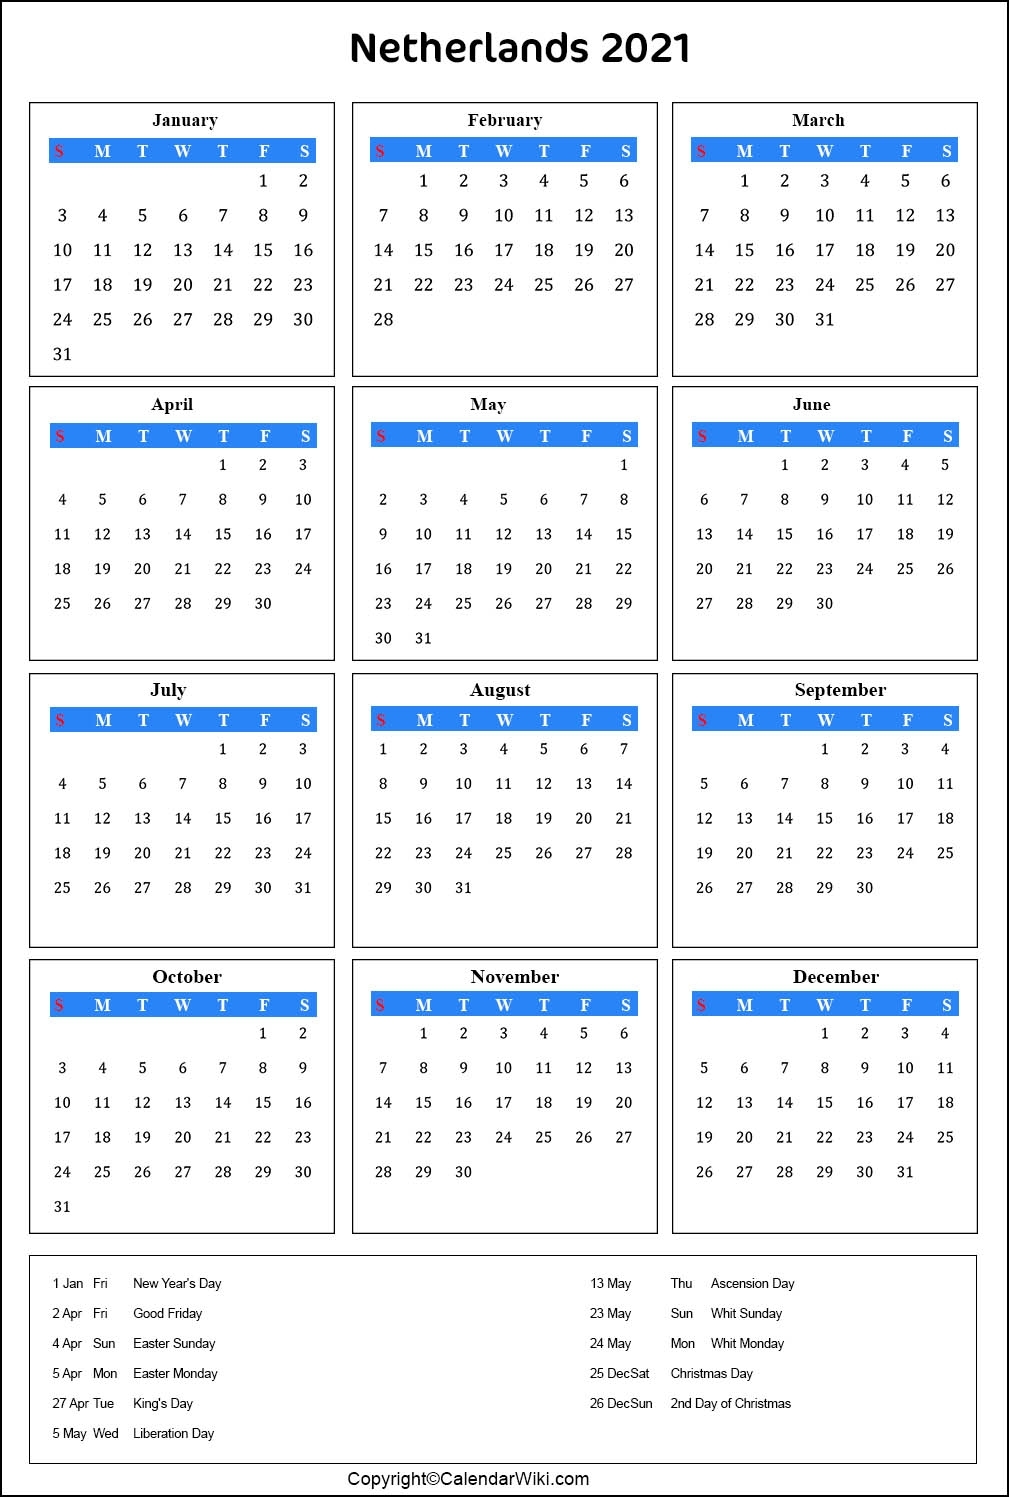 Printable Netherlands Calendar 2021 With Holidays [Public